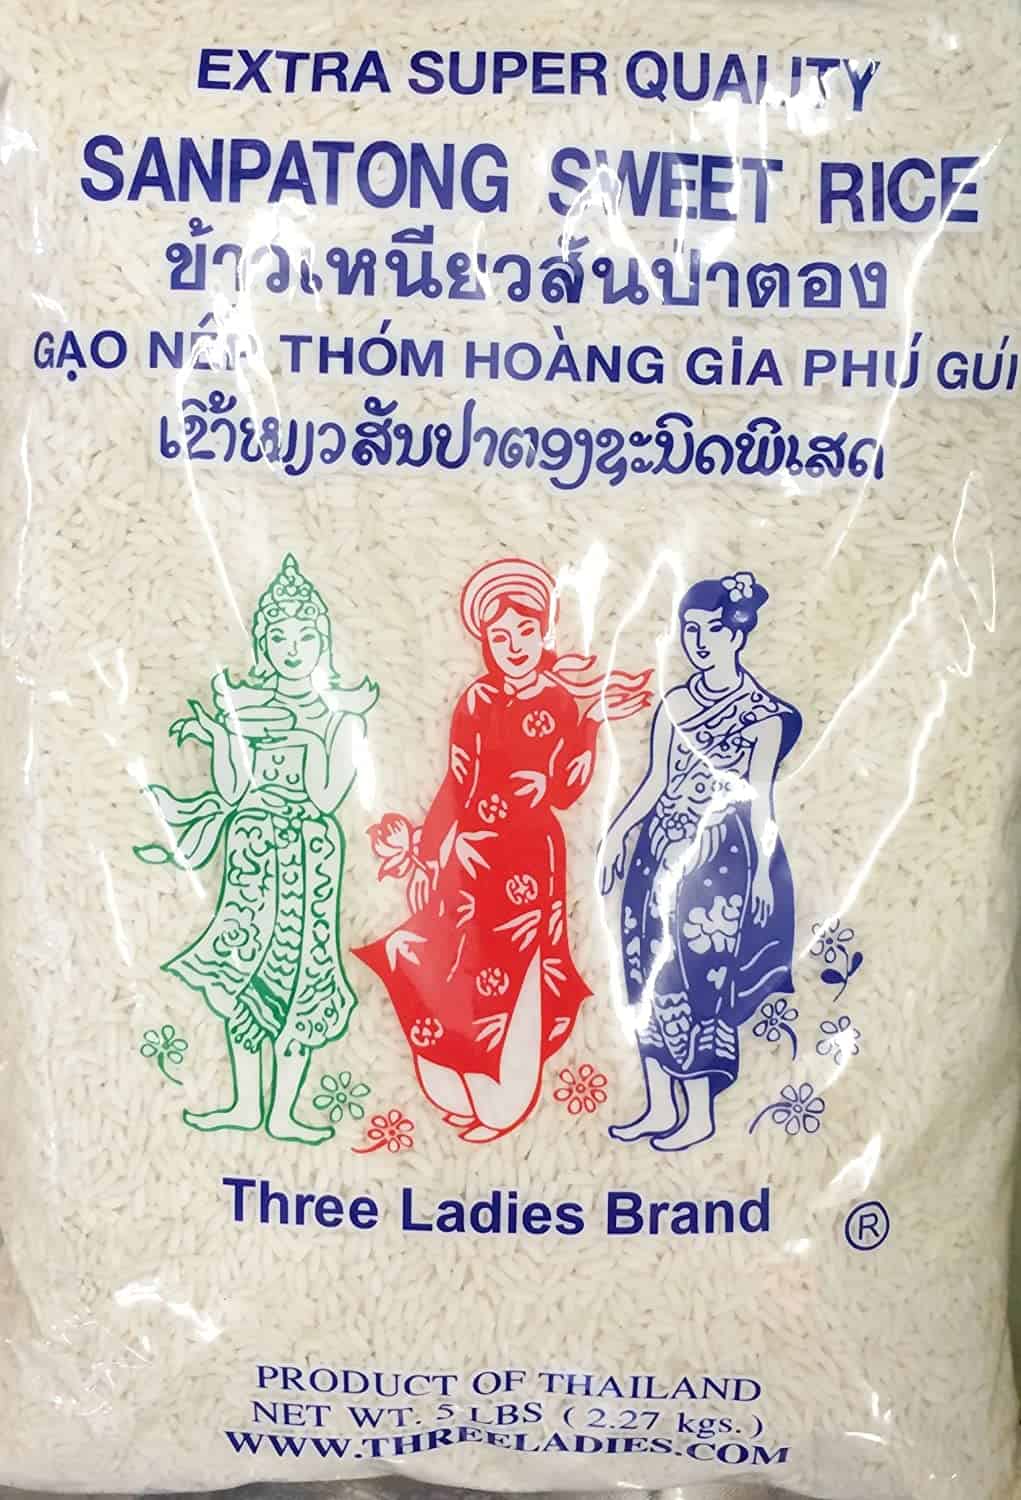 Bästa långkorniga riset: Three Ladies Brand Sanpatong Sweet Rice